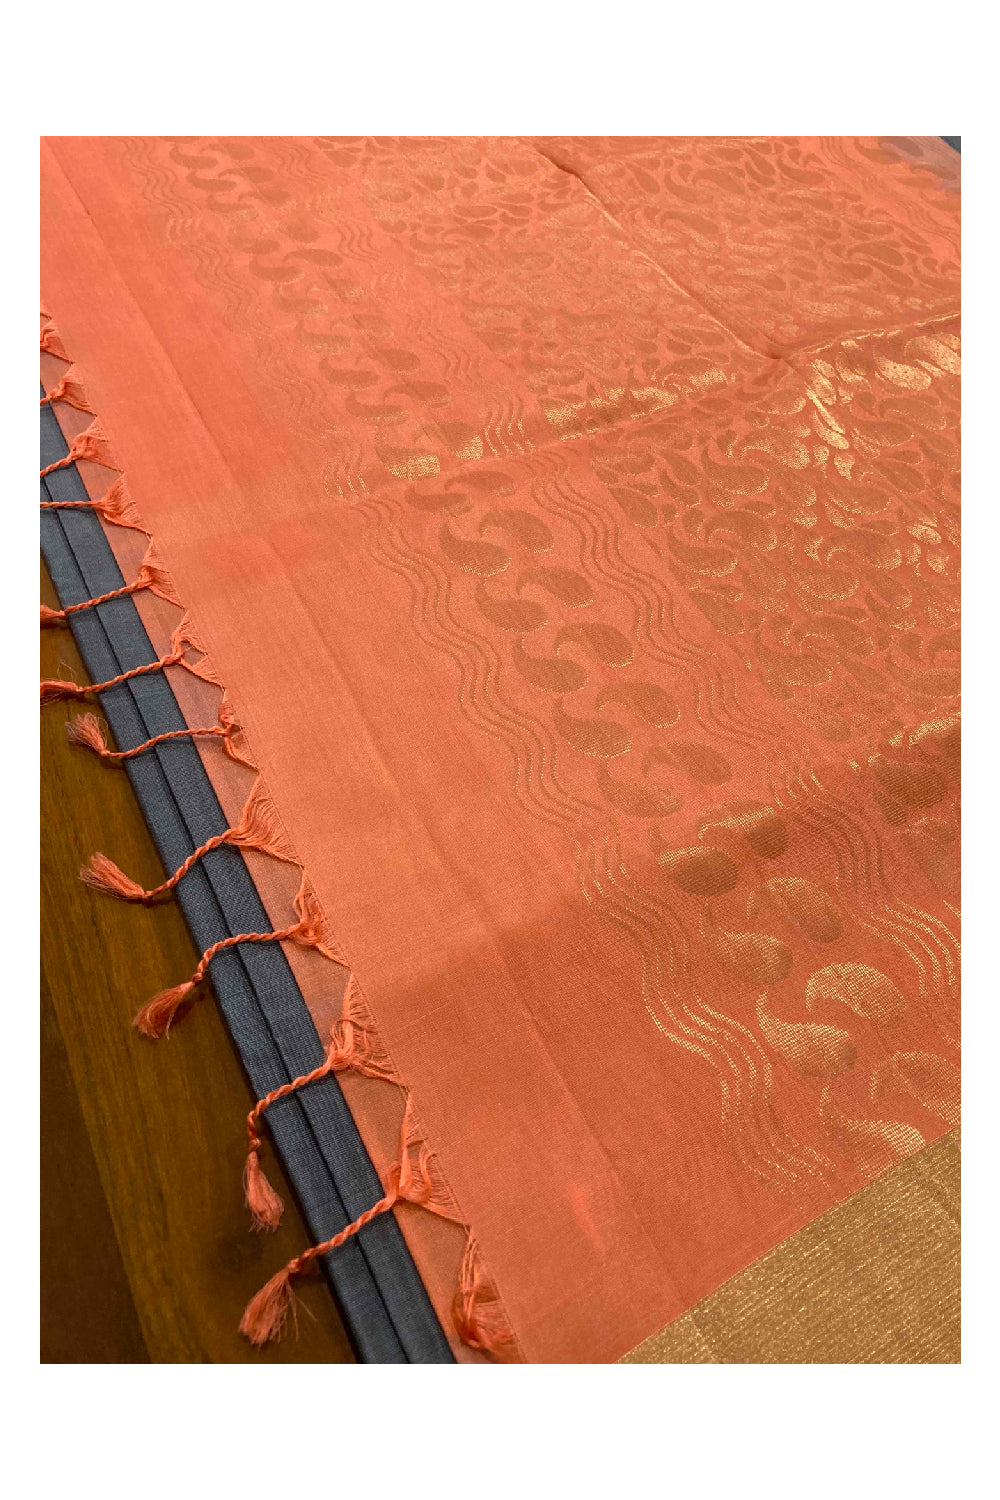 Southloom Handloom Pure Silk Kanchipuram Saree in Grey and Sandal Paisley Motifs